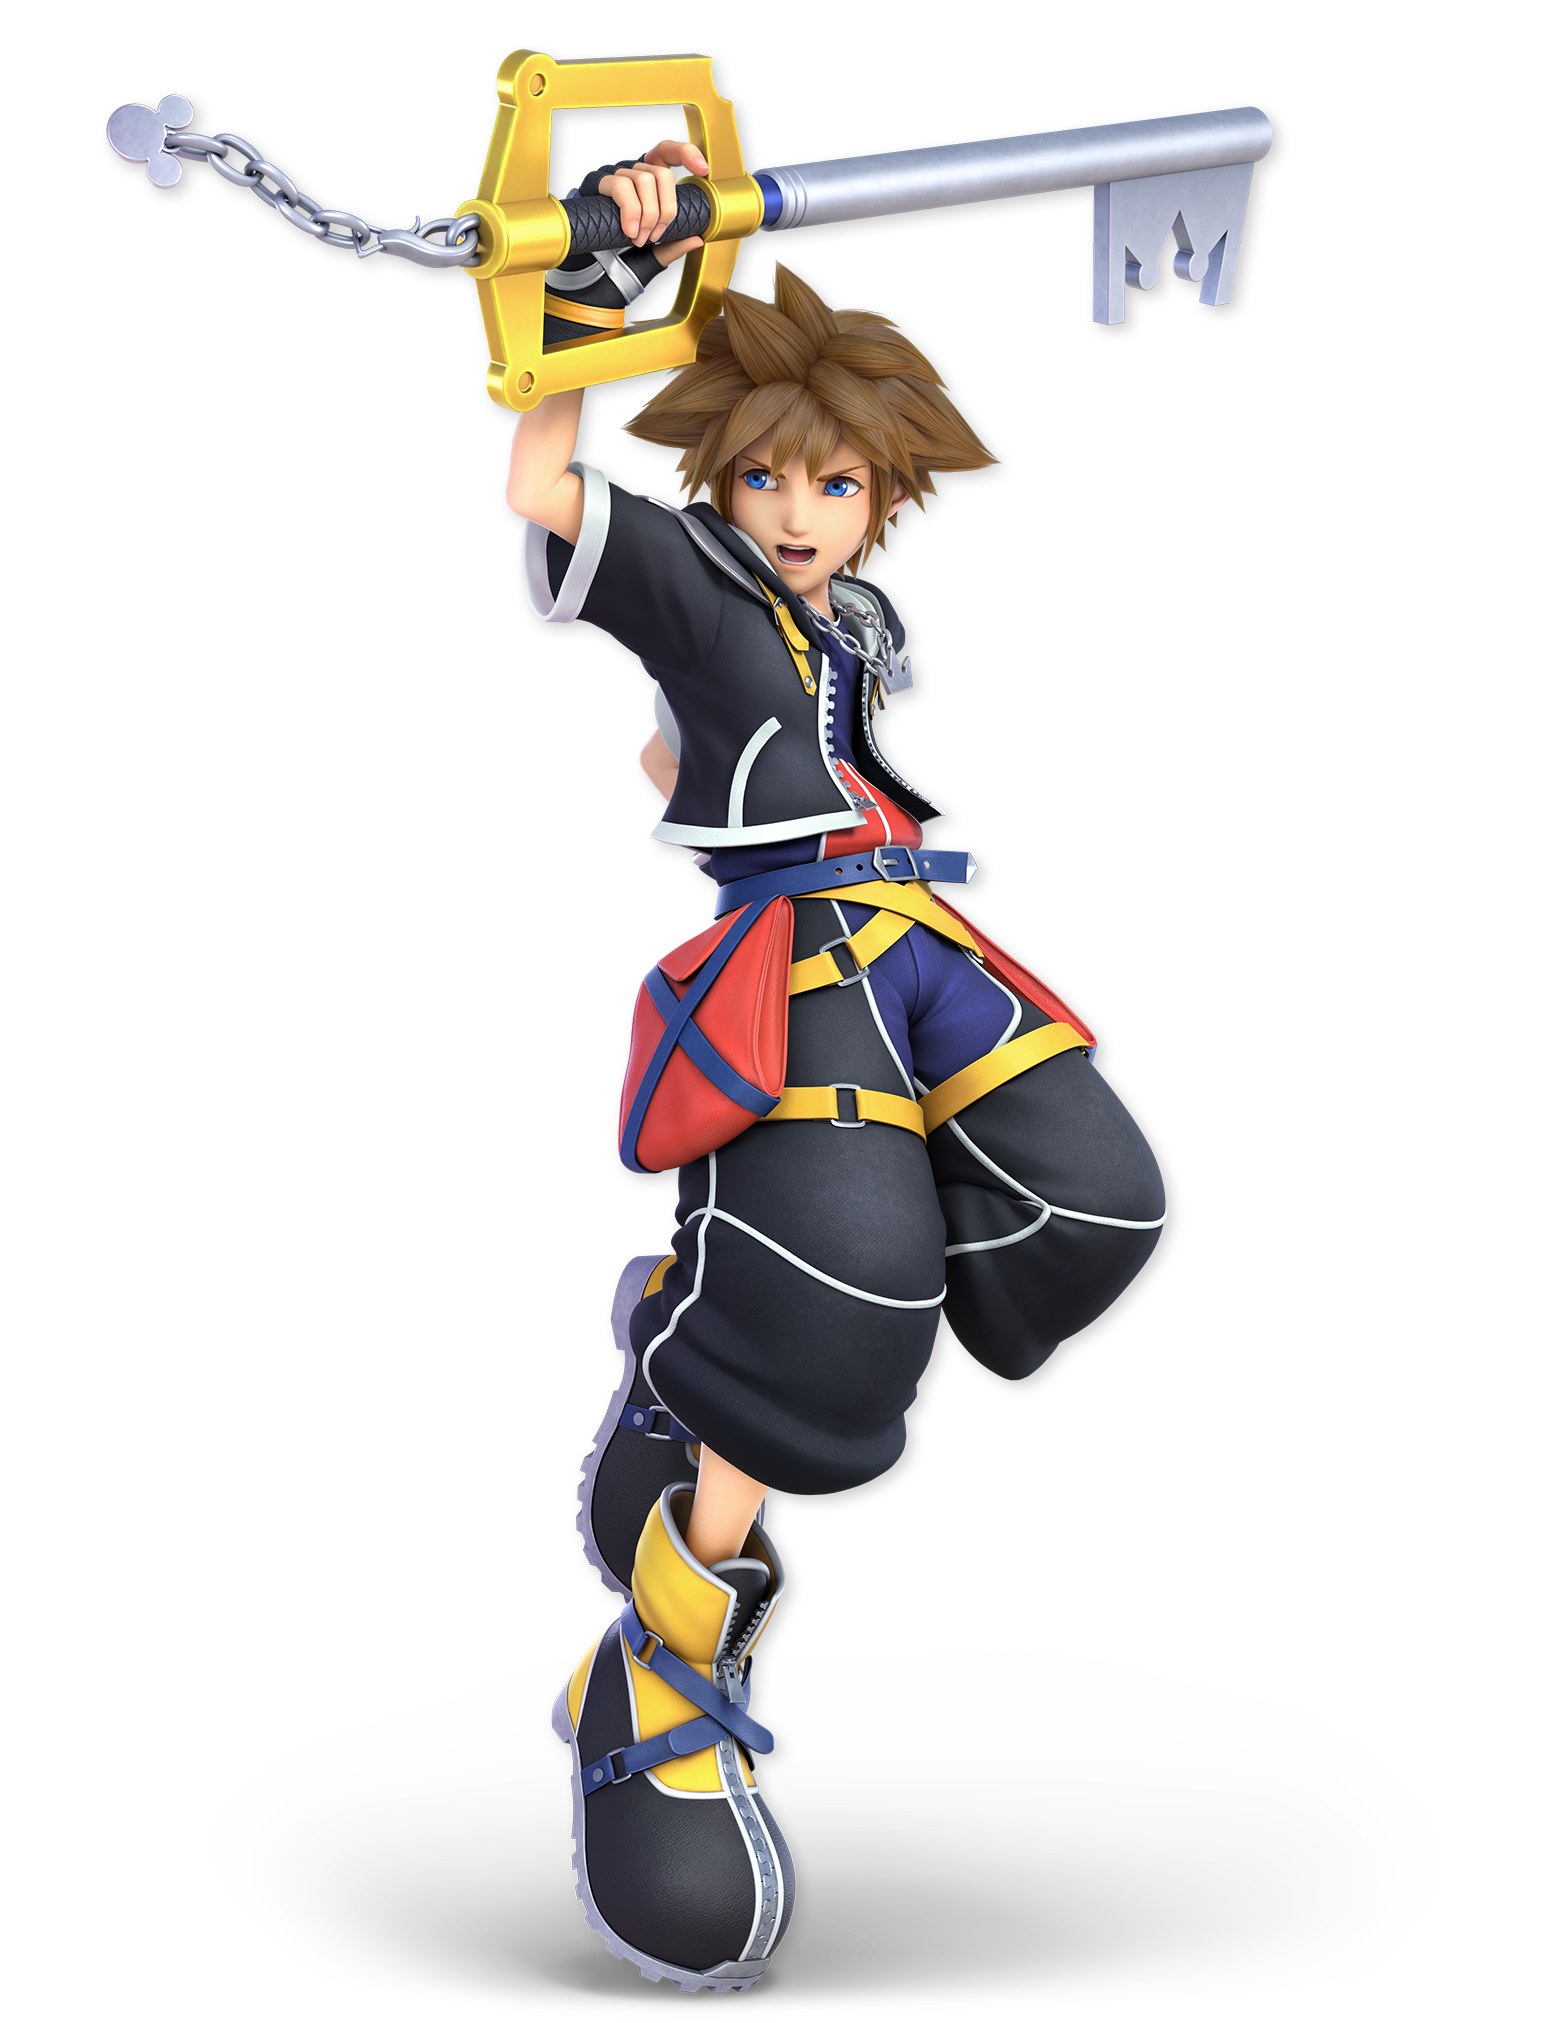 Kingdom Hearts II Sora Render From Super Smash Bros Ultimate